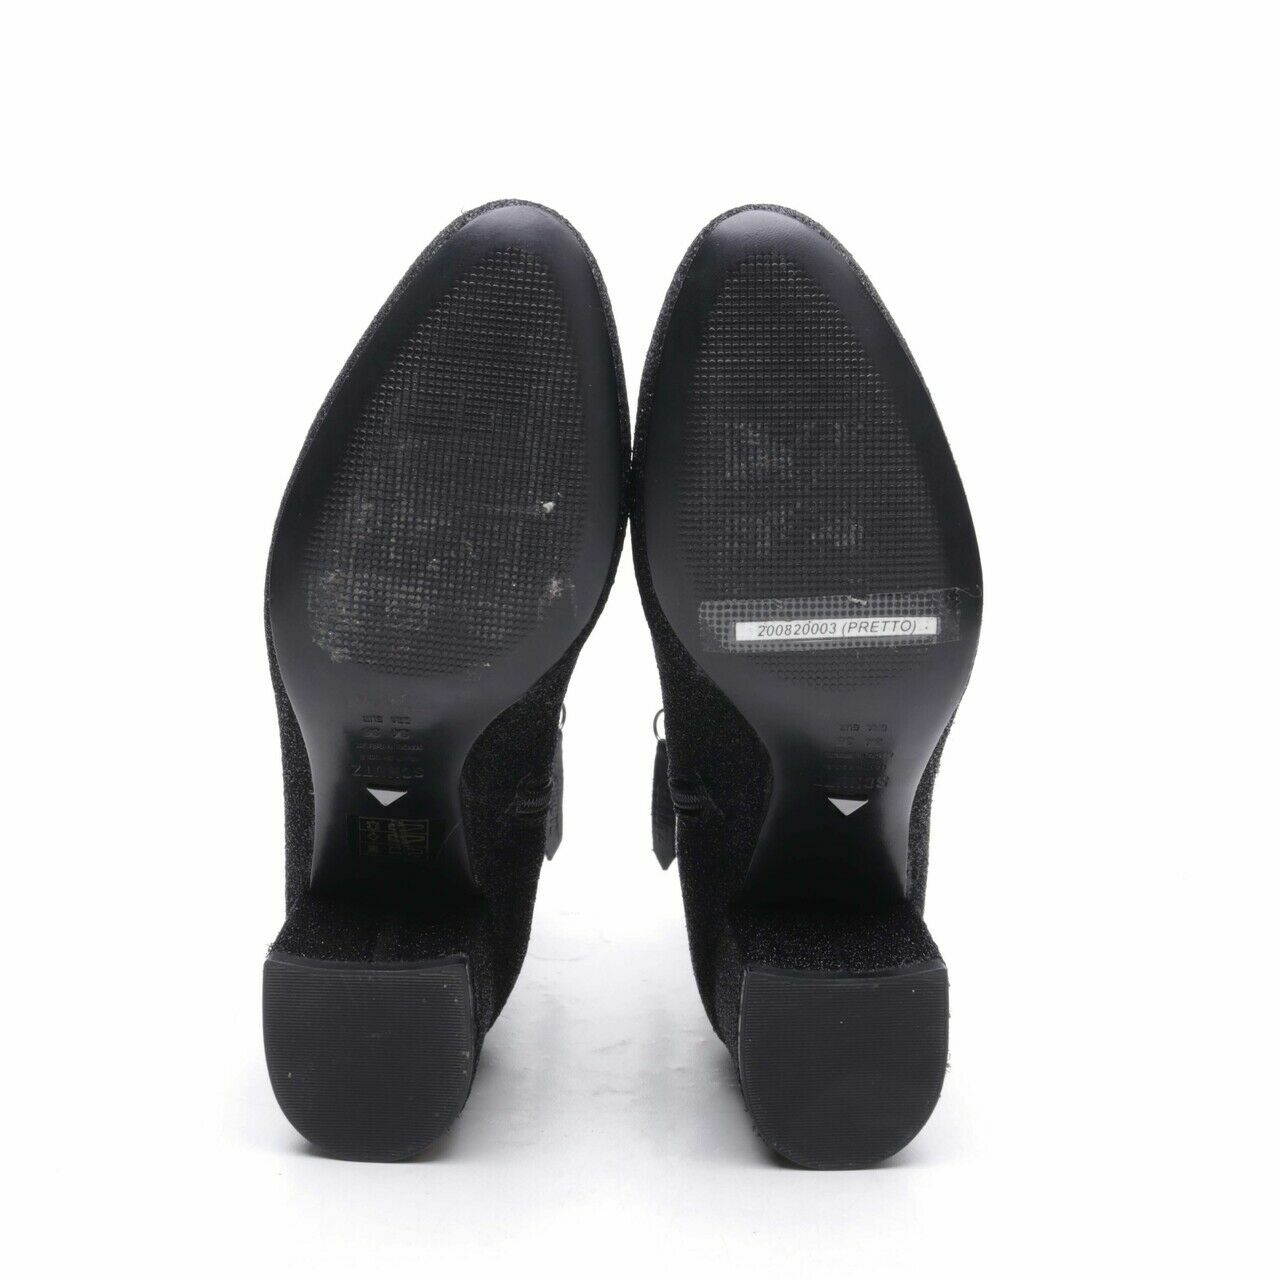 Schutz Black Ankle Boots Heels